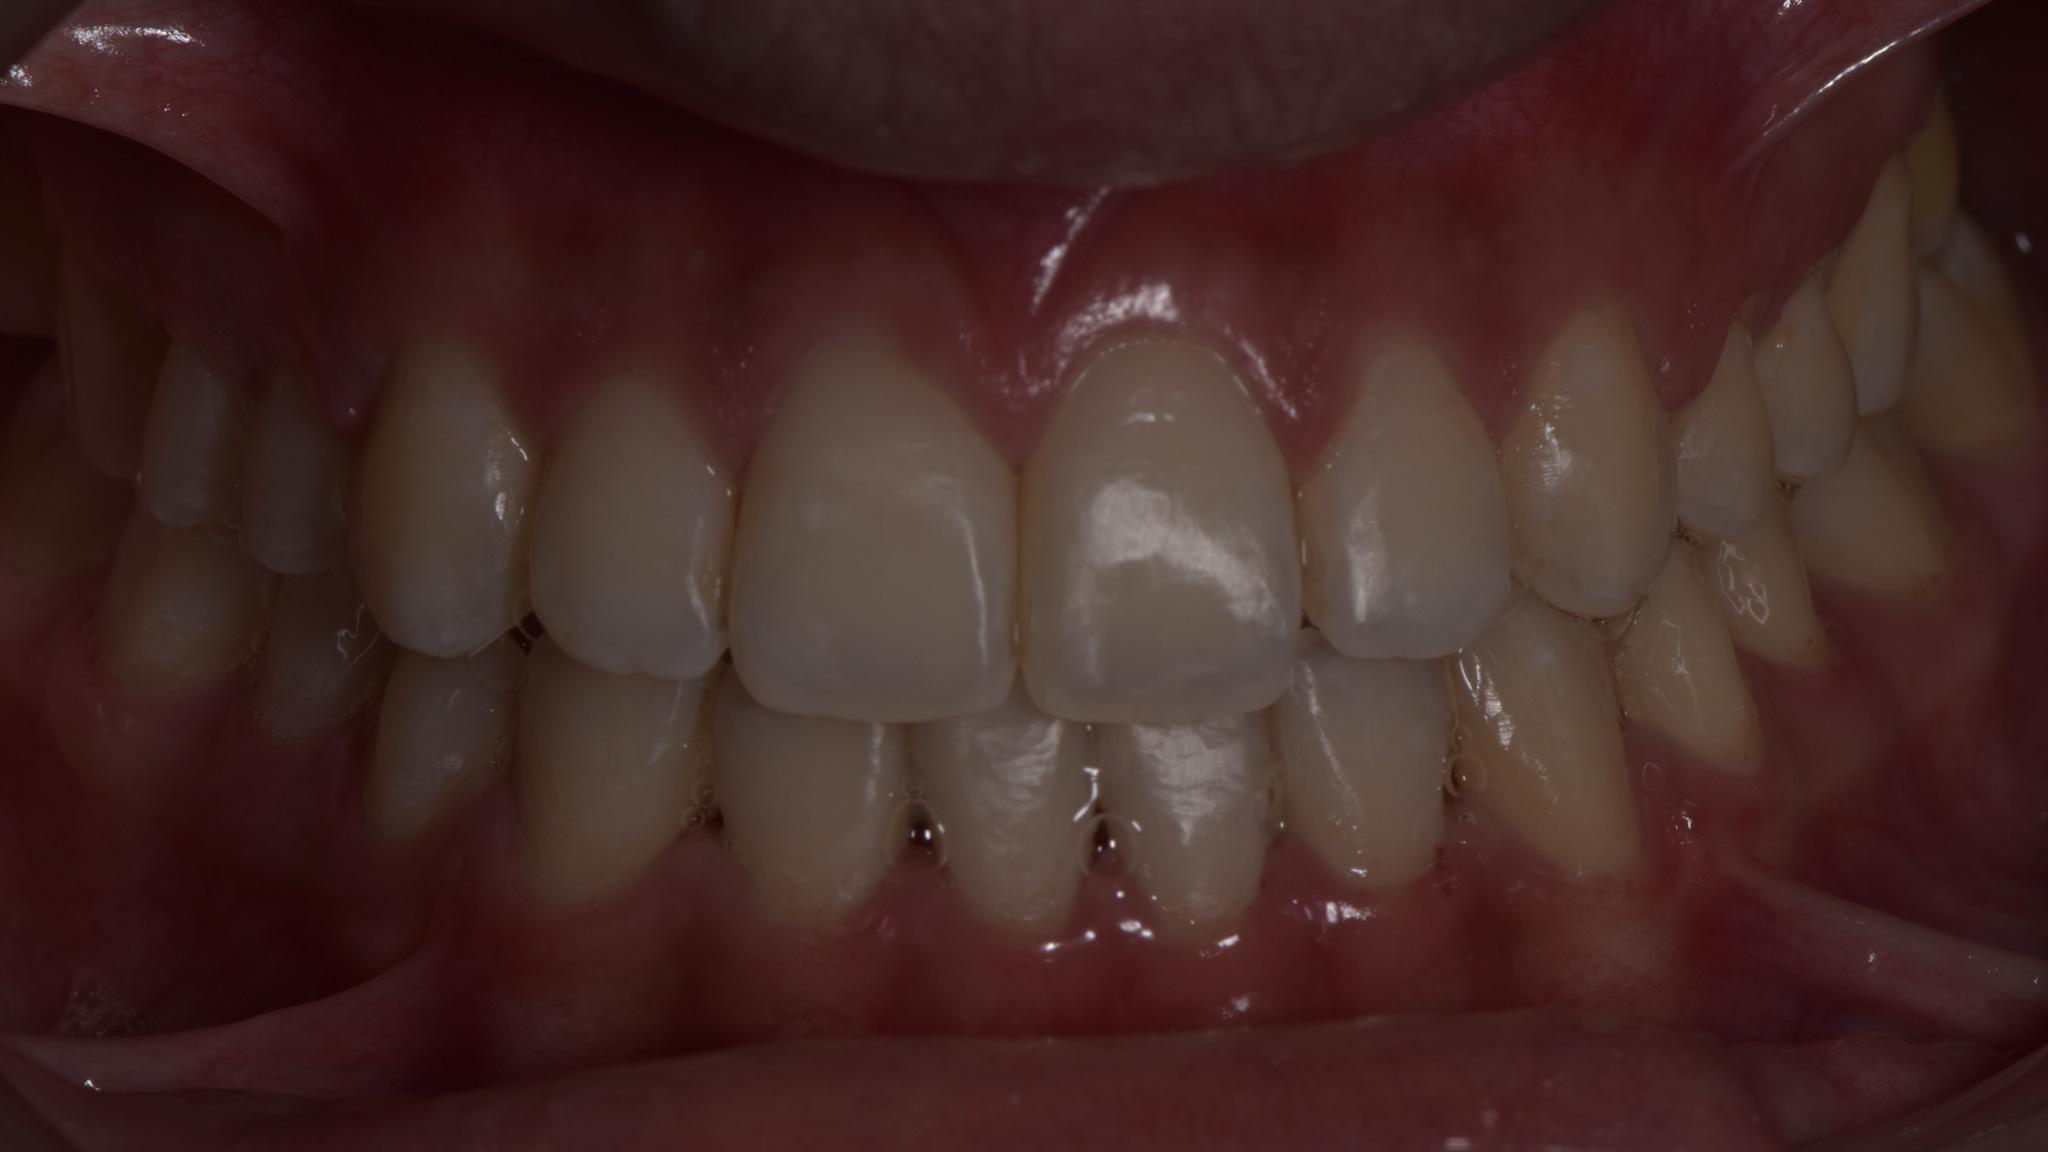 After image of teeth orthodontics procedure  spectrum advanced dental care in mumbai